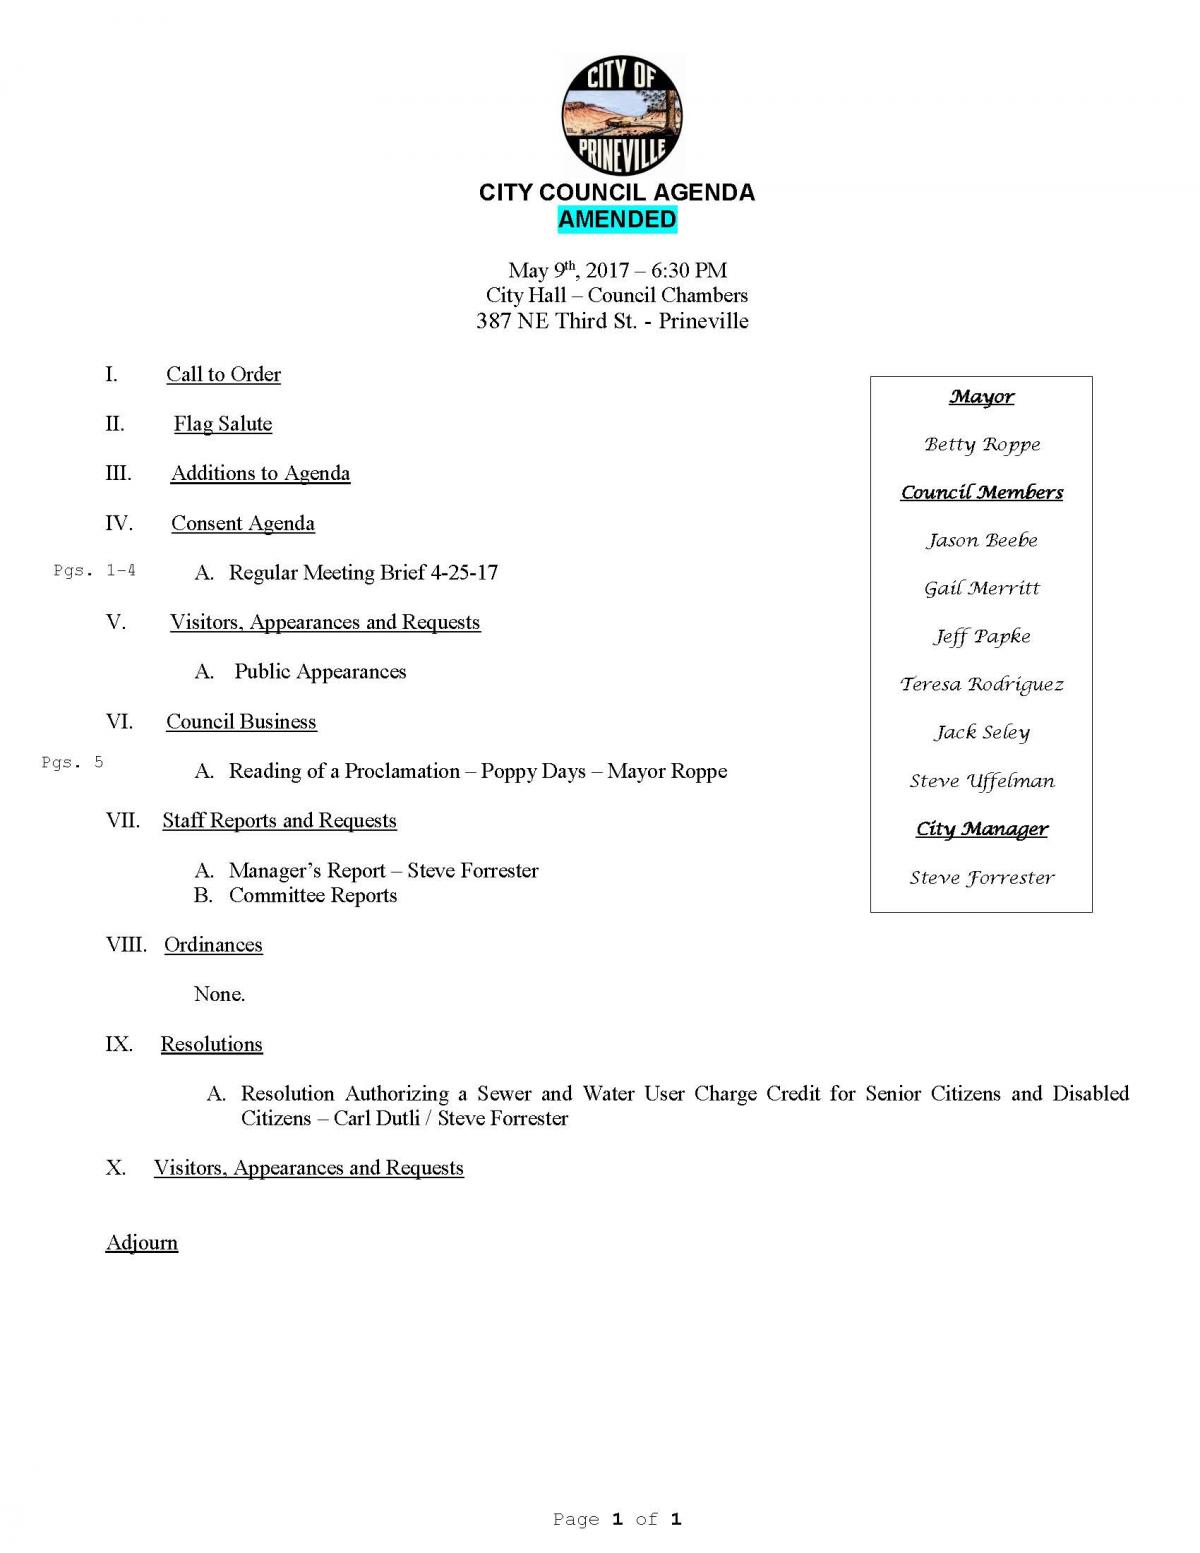 Council Agenda 5-9-17 Amended